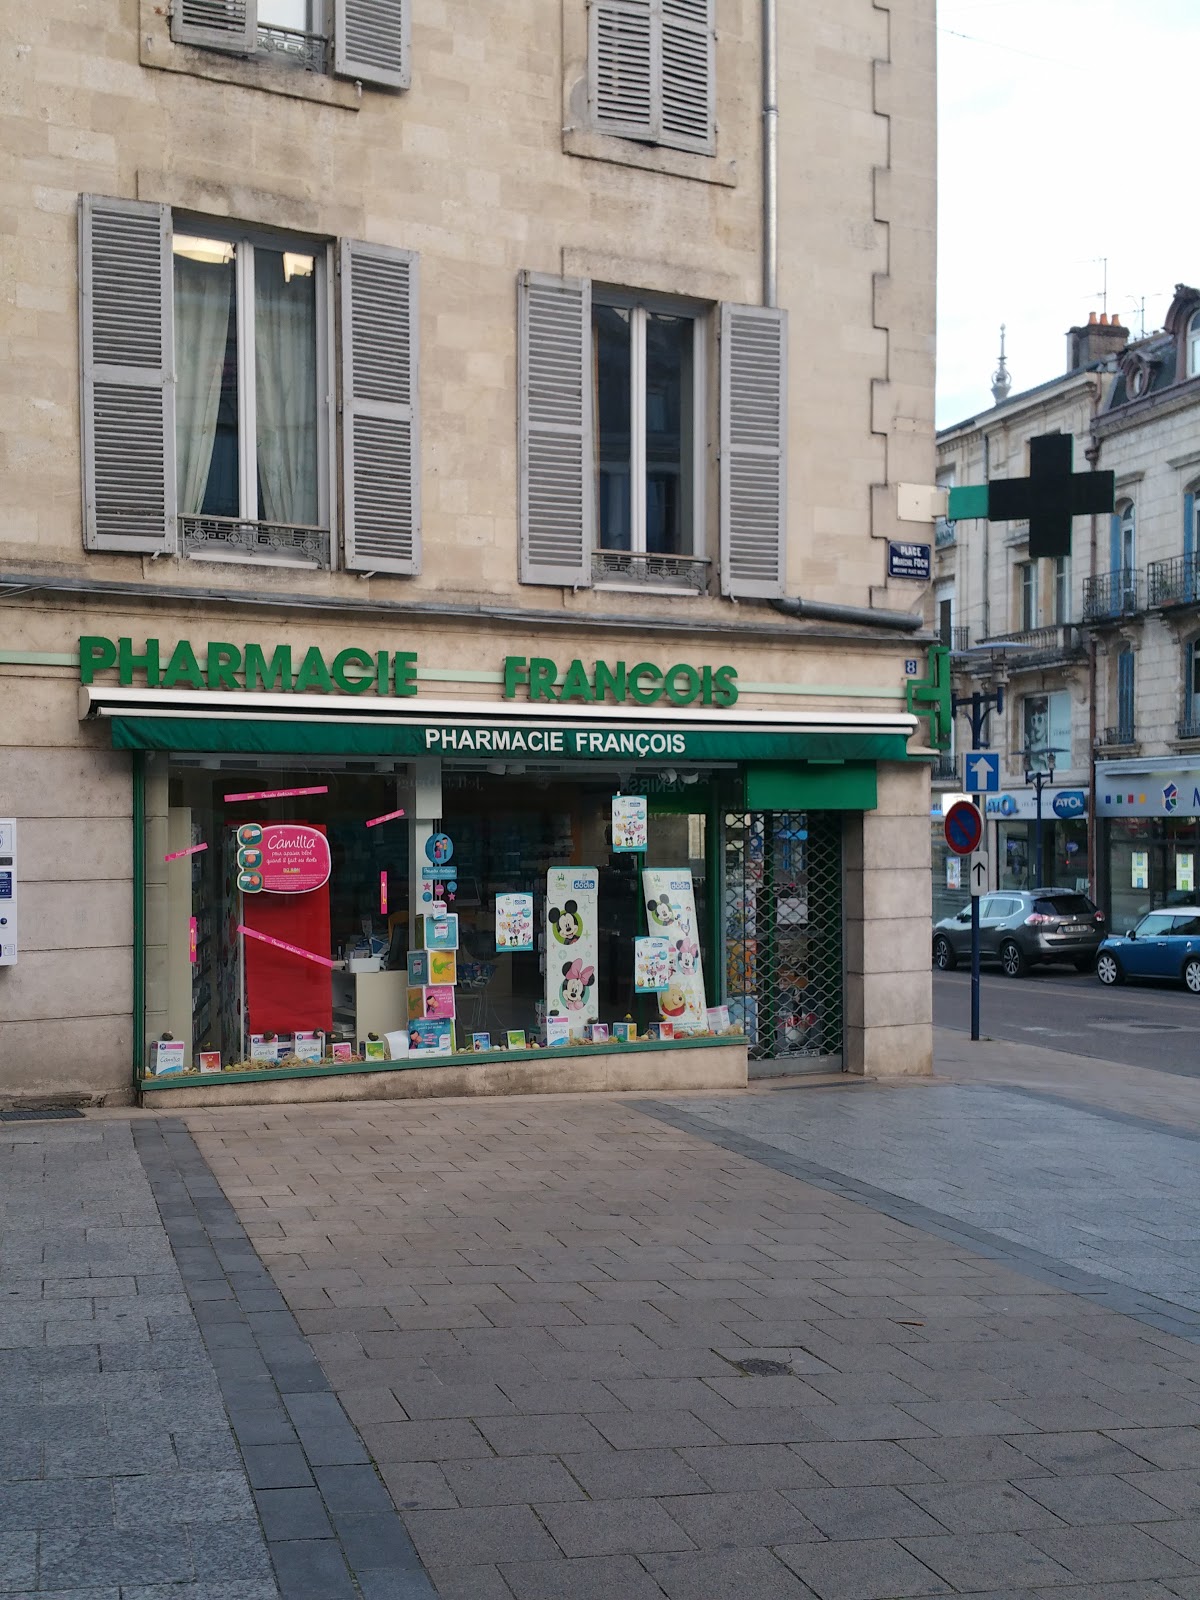 Pharmacie François